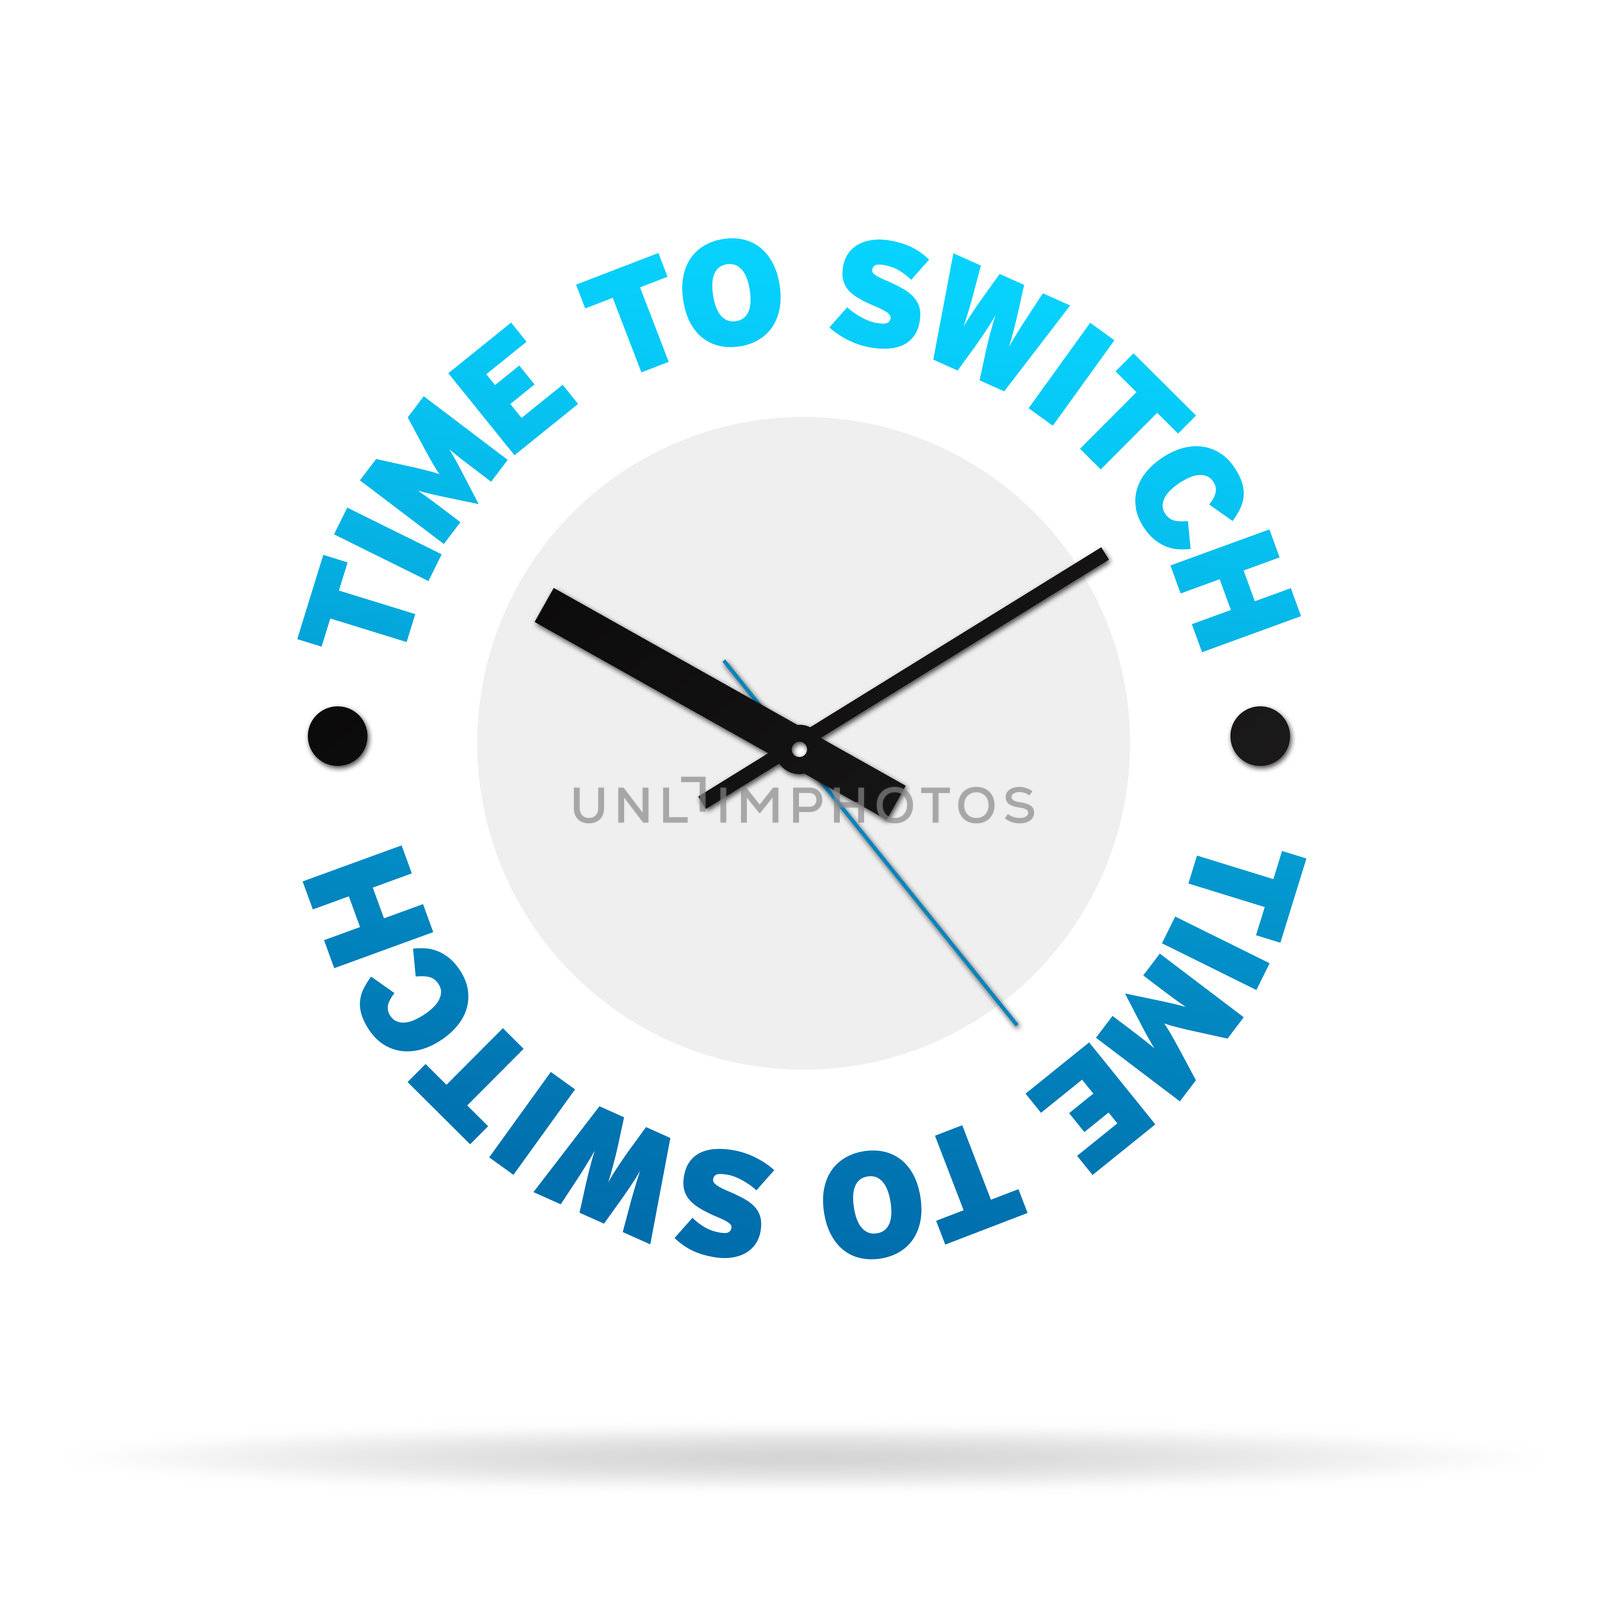 Time To Switch Clock by kbuntu